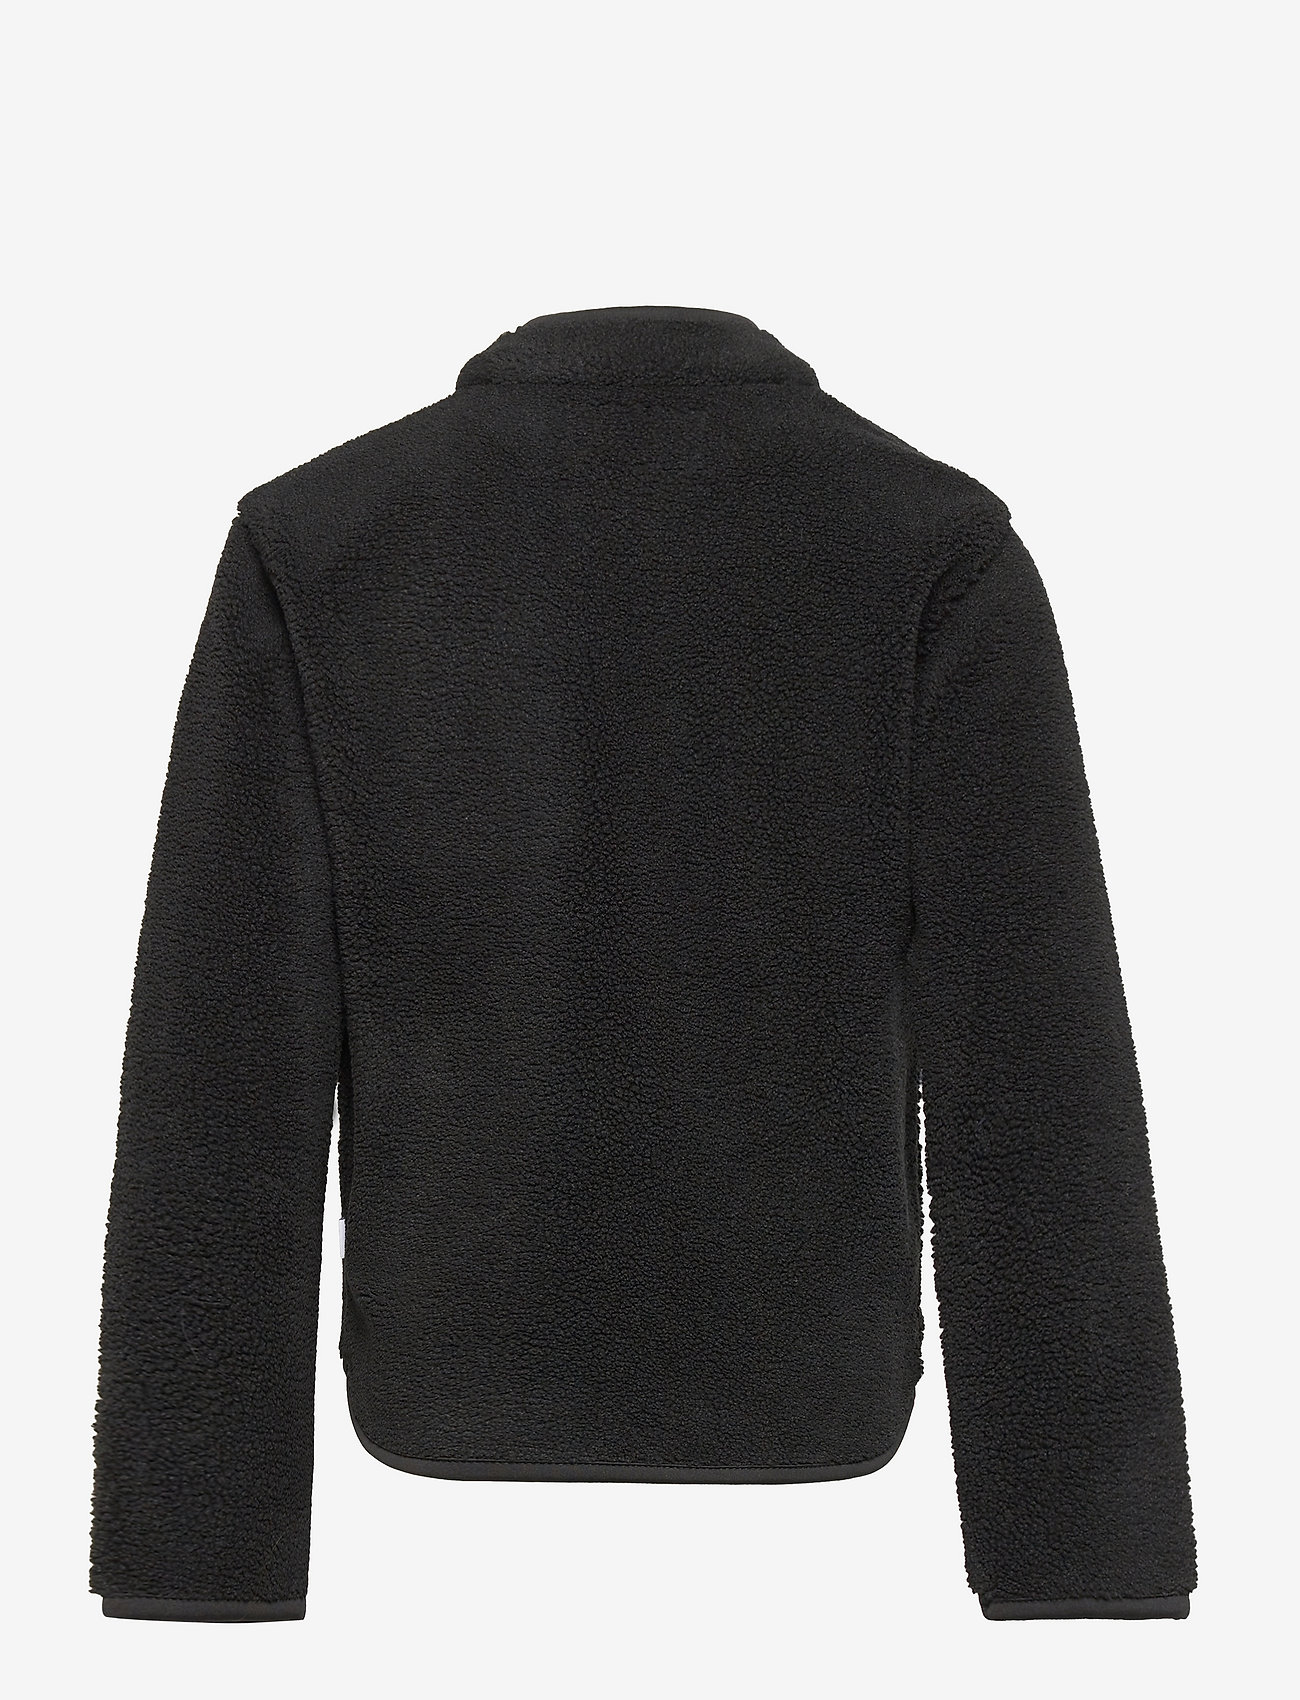 Kronstadt - Sherpa fleece kids - fleece jacket - black - 1